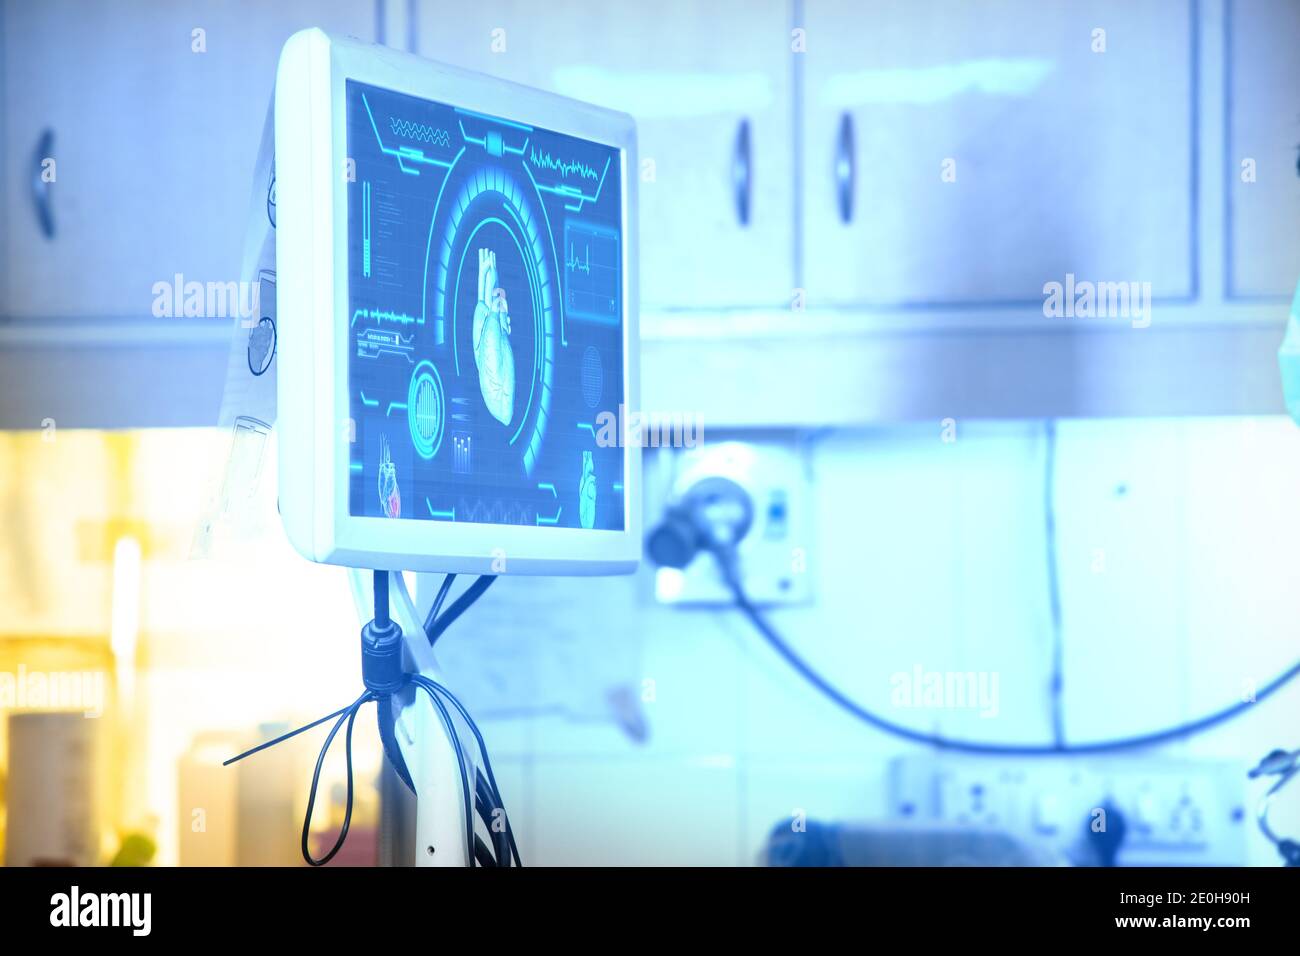 Advance scanning machine computer screen at hospital. modern medical equipment. Digital diagnostics technology, heart disease concept, background, cop Stock Photo